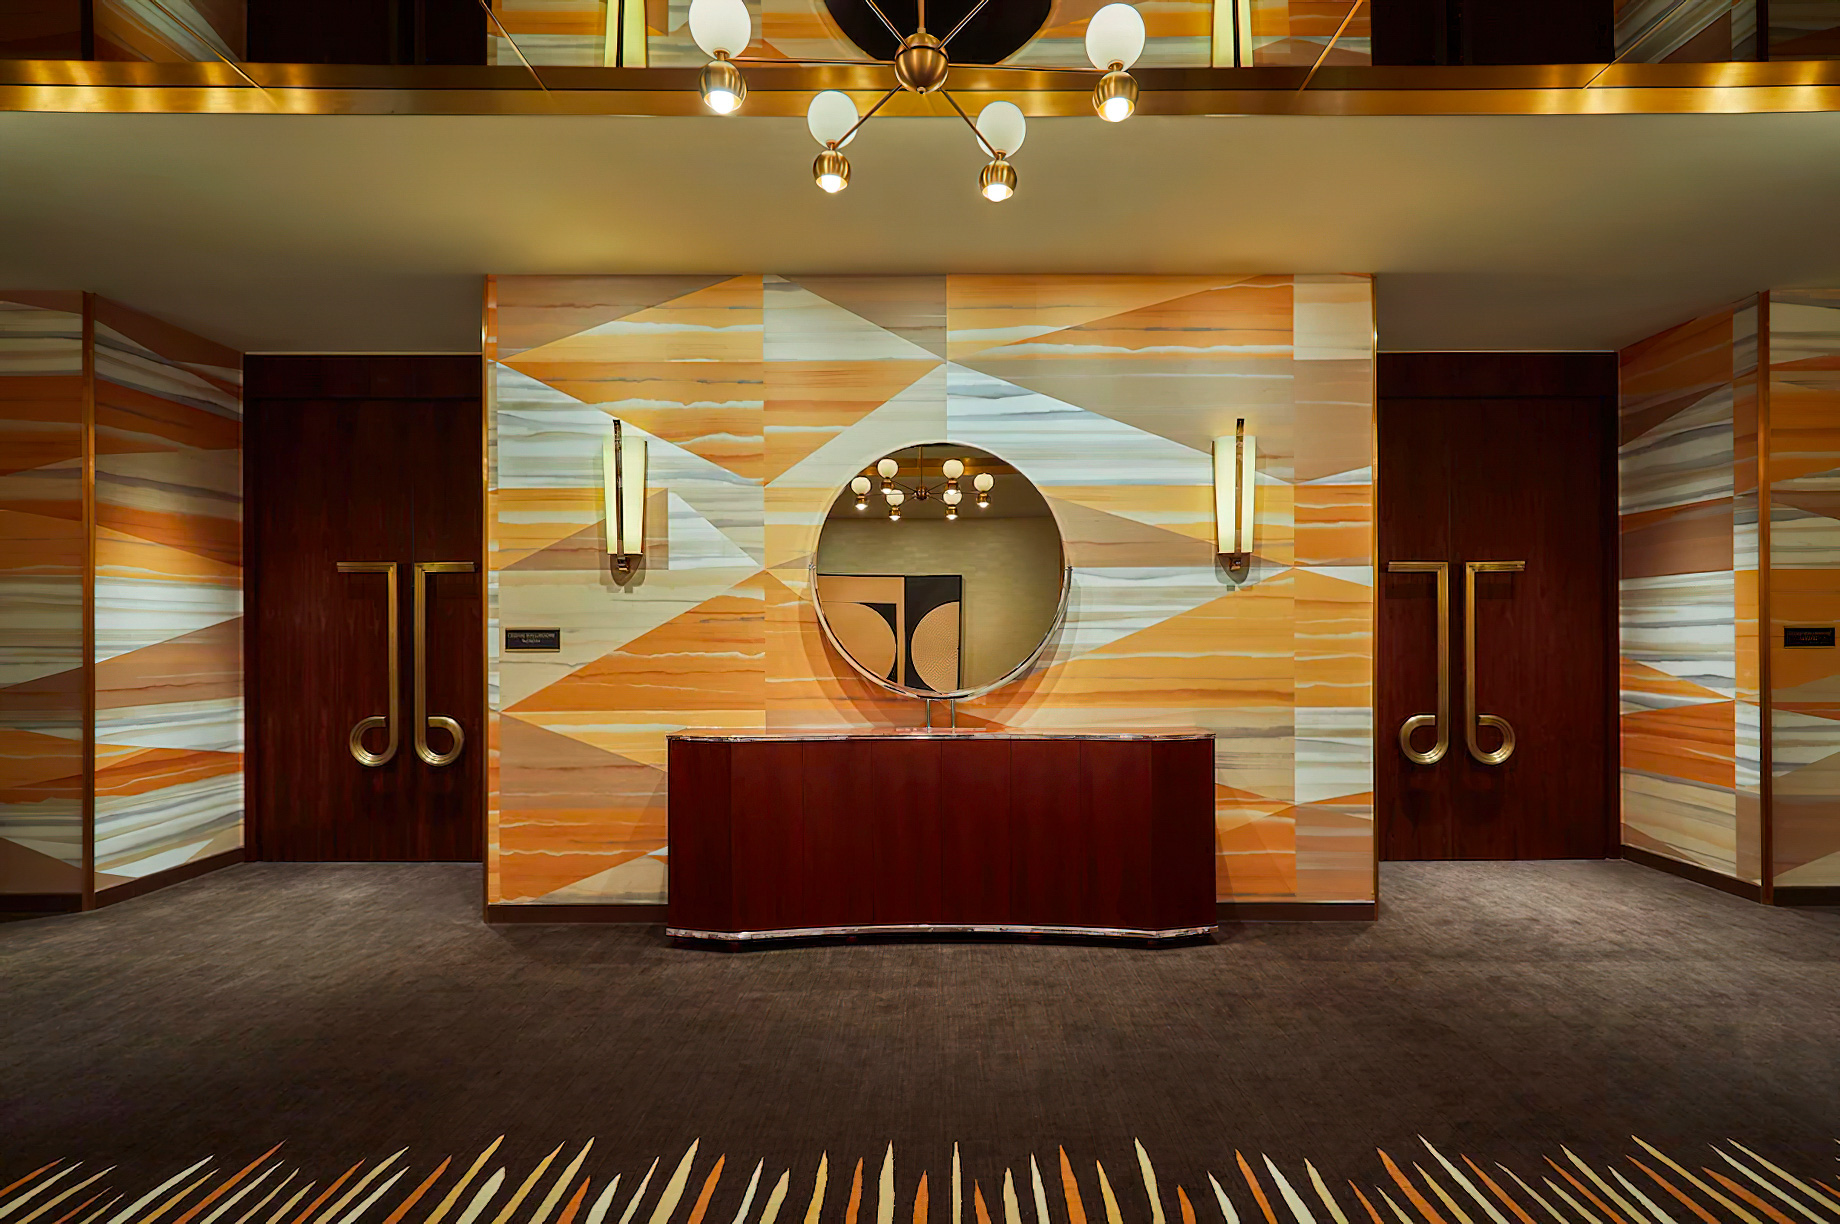 Viceroy Chicago Hotel – Chicago, IL, USA – Ballroom Entrance